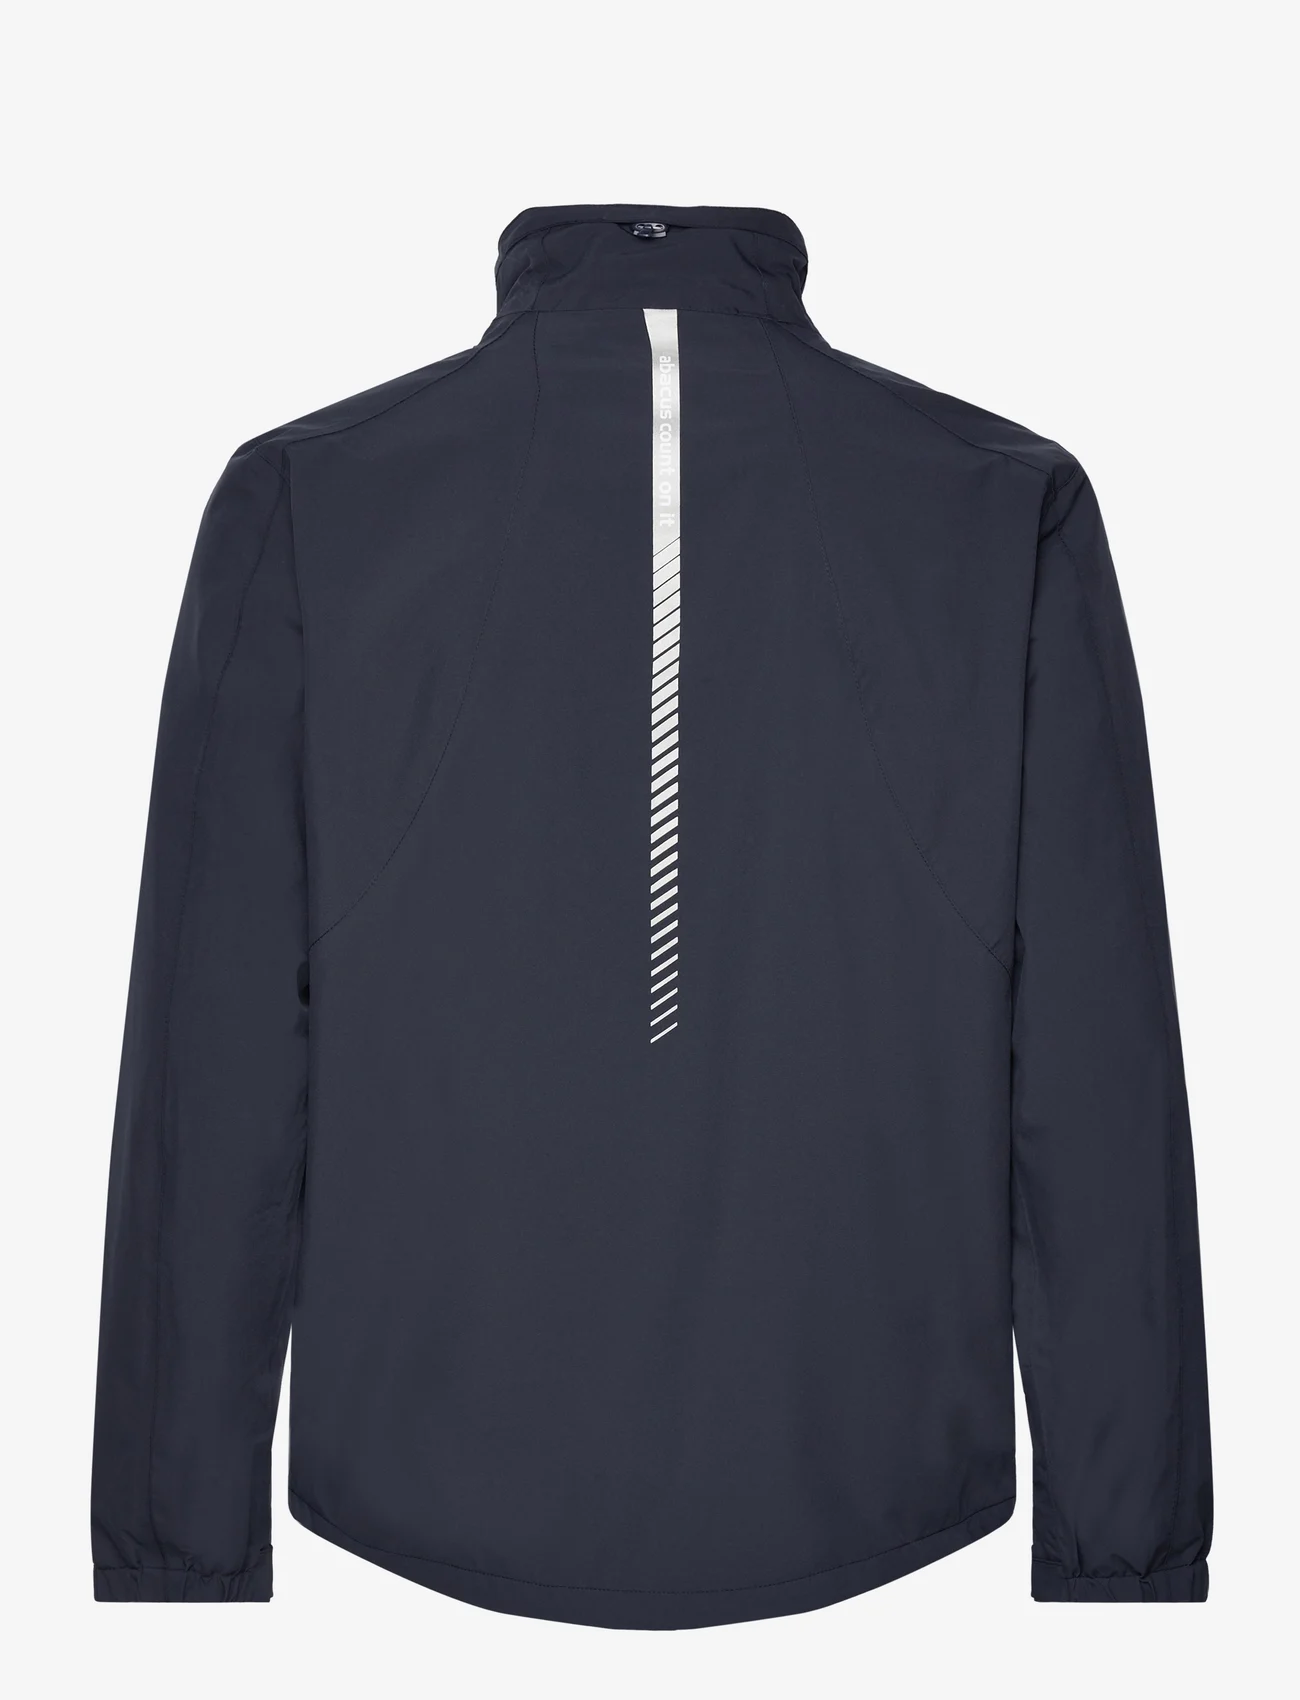 Abacus - Mens Links stretch rainjacket - golfjassen - navy - 1